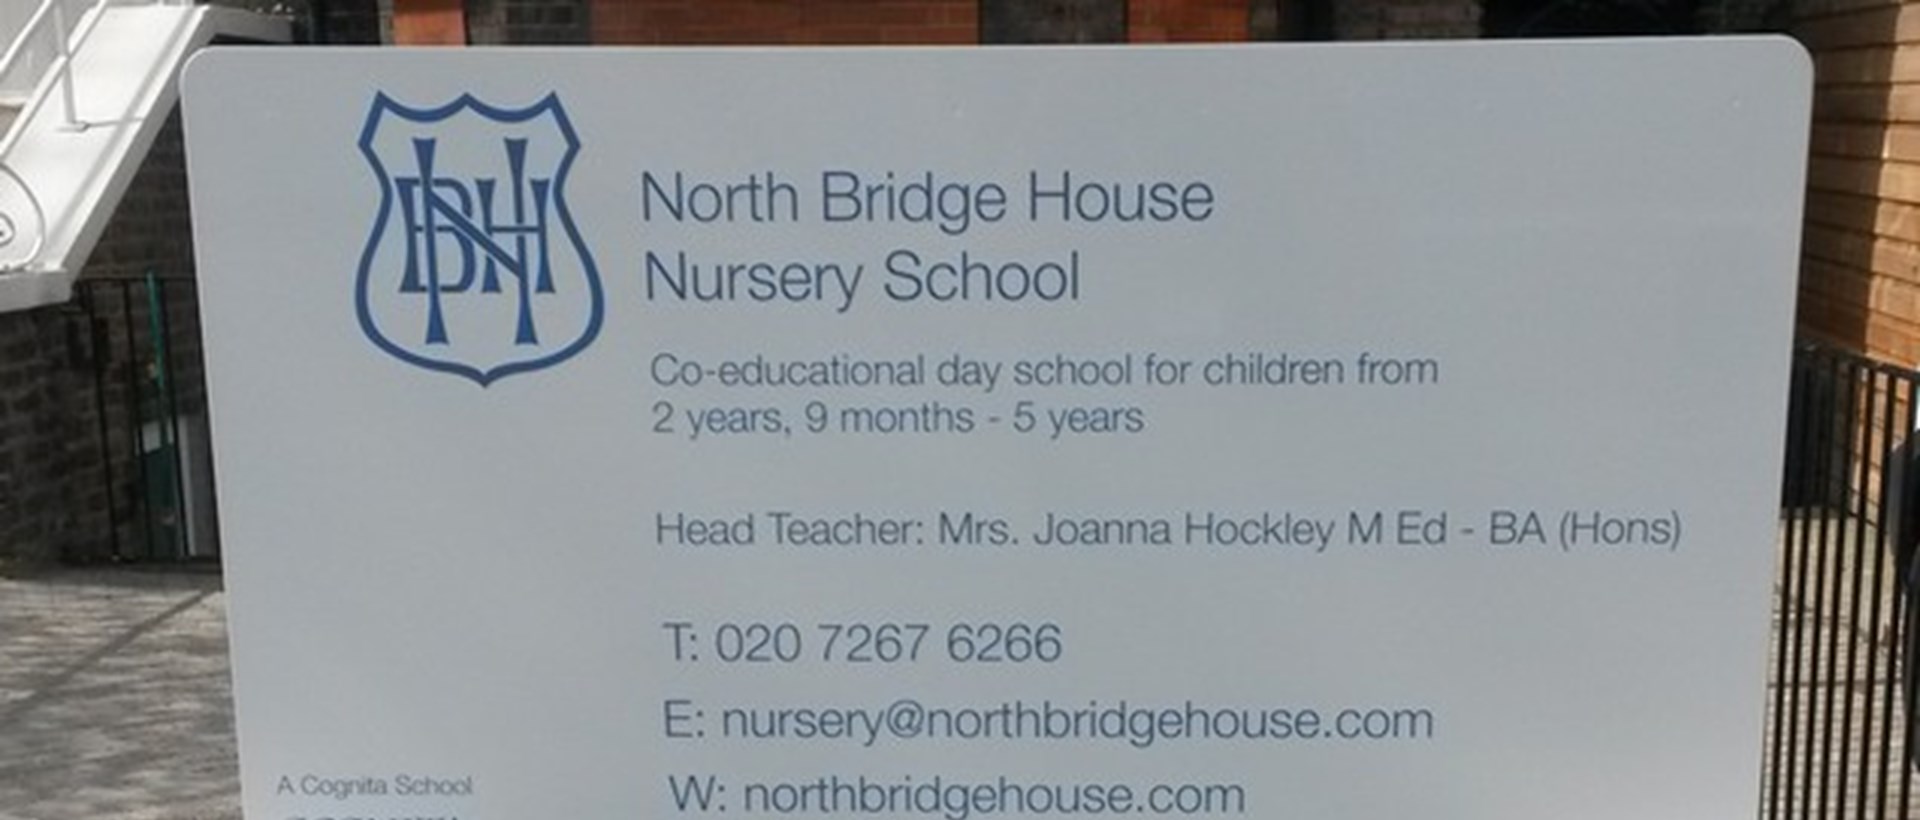 Entrance Sign To Find North Bridge House Nursery School In London Borough Of Camden